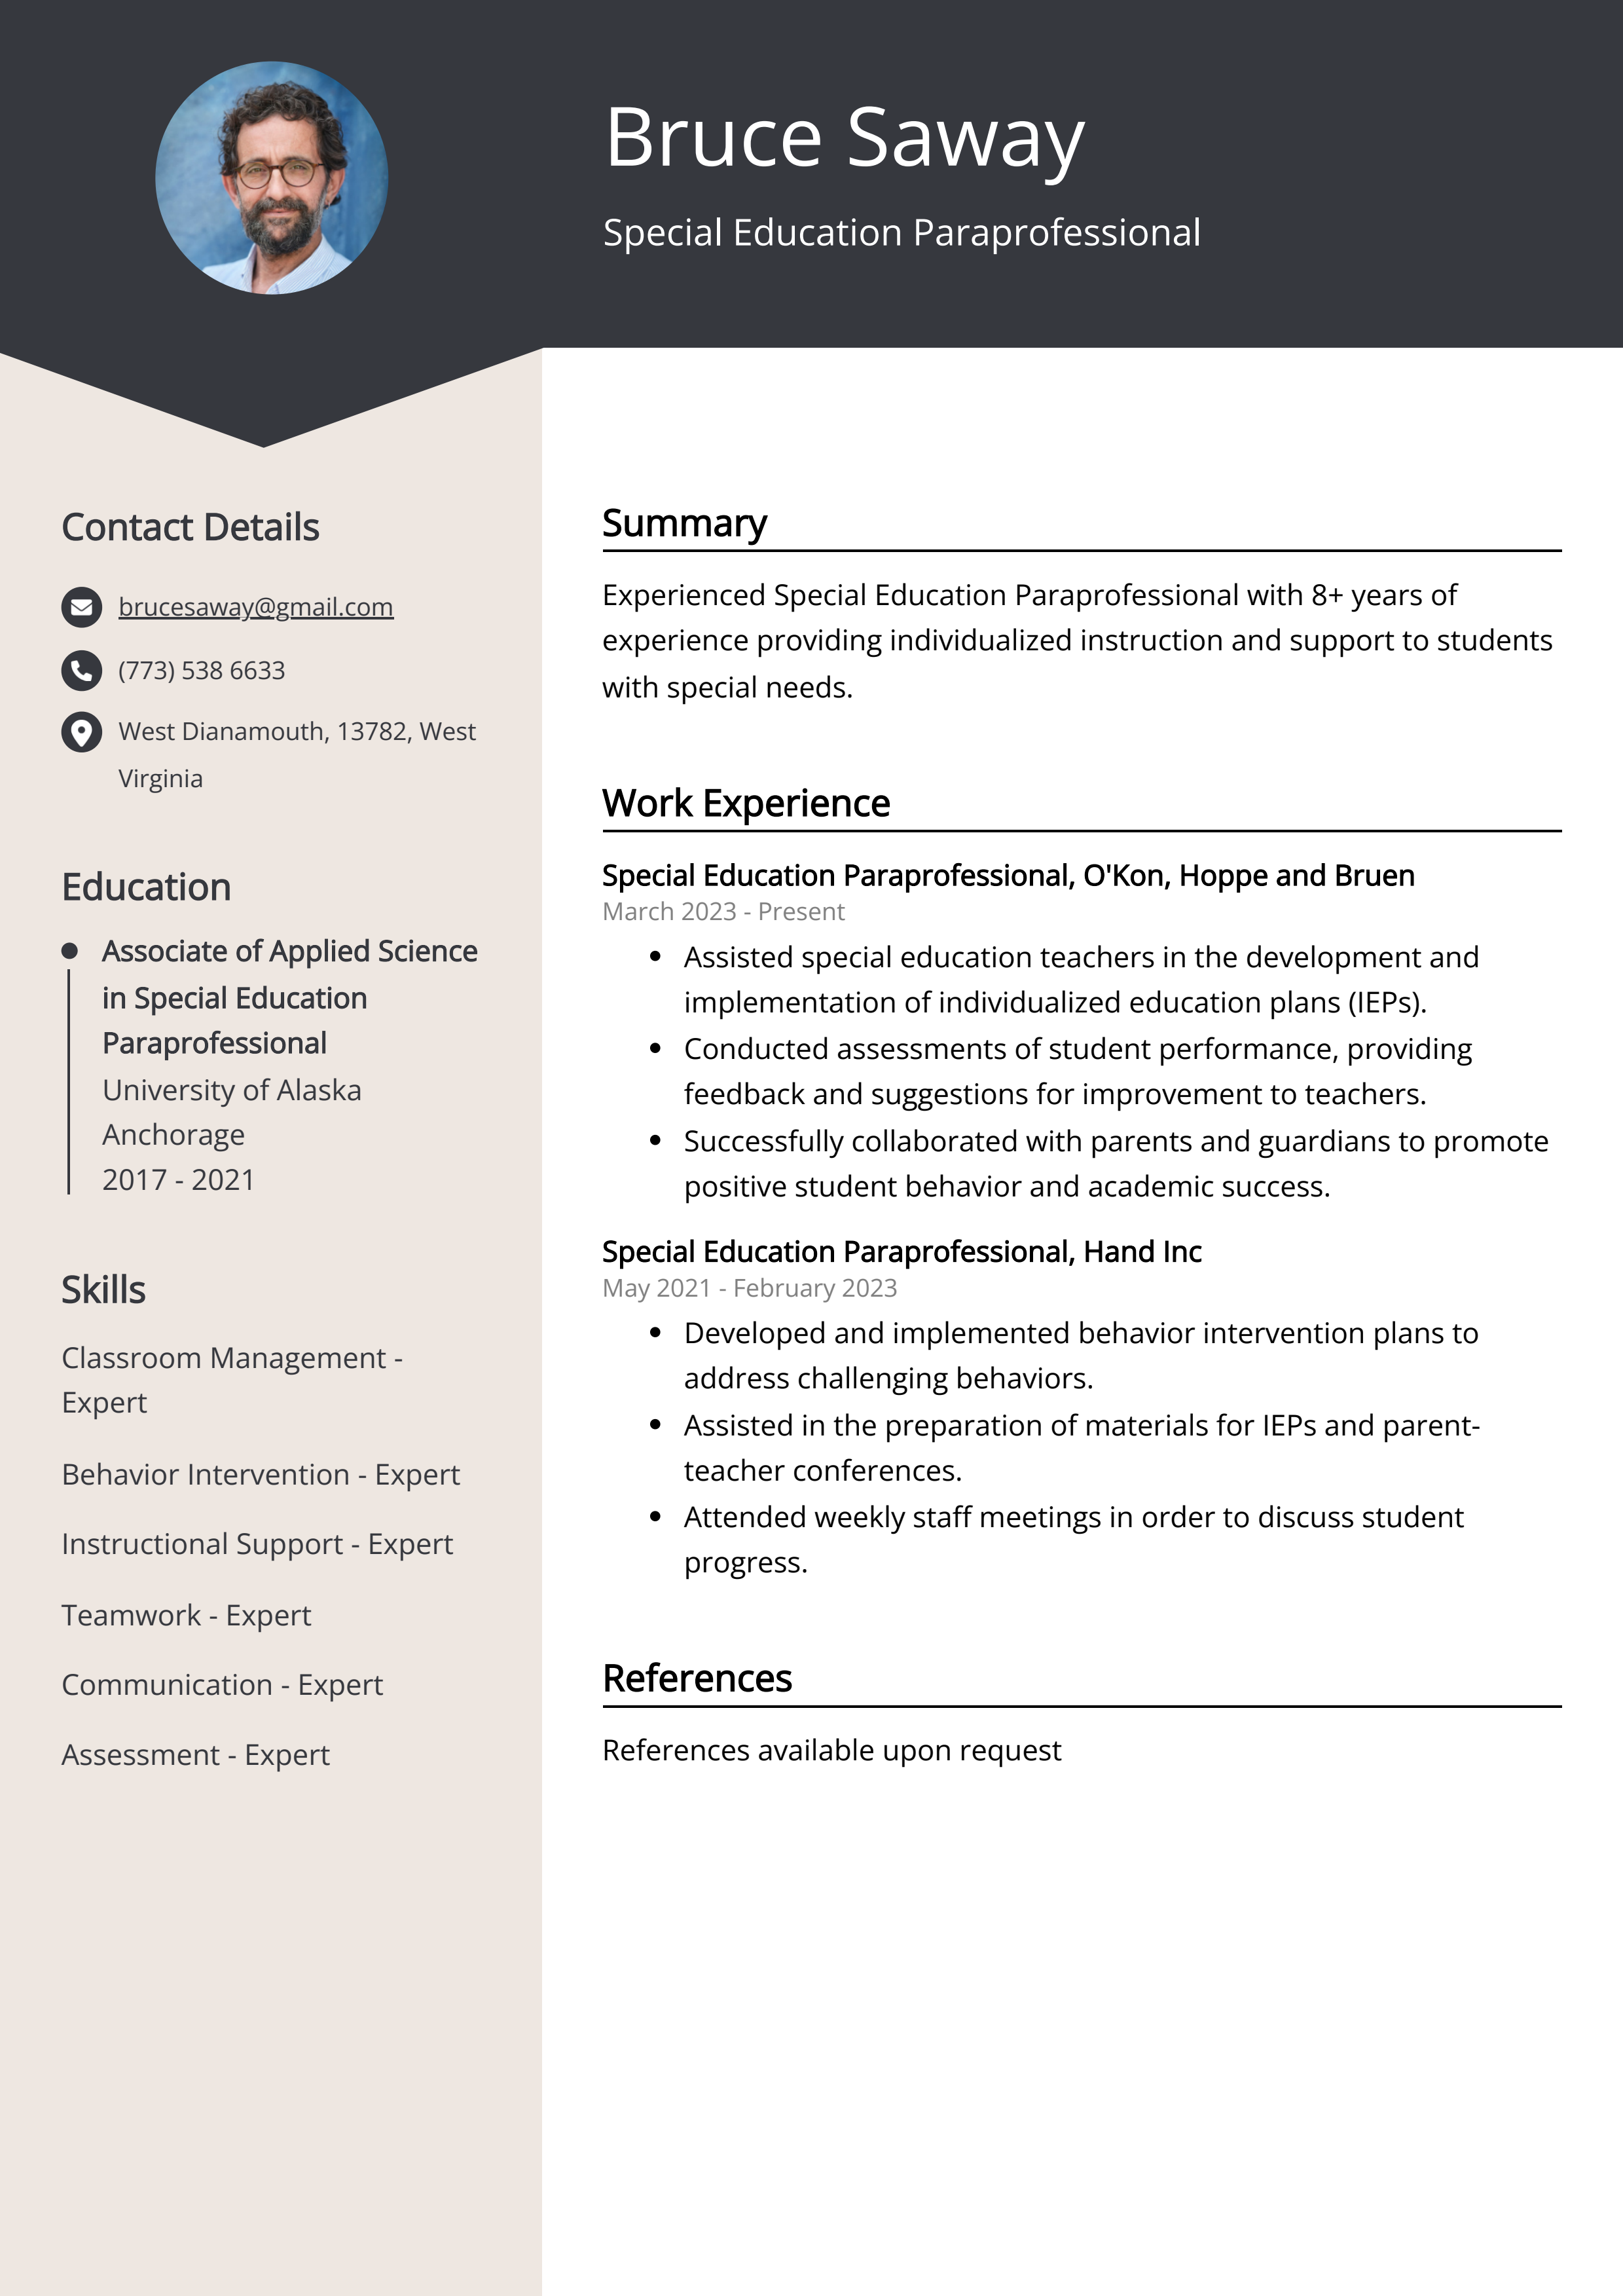 Special Education Paraprofessional CV Example